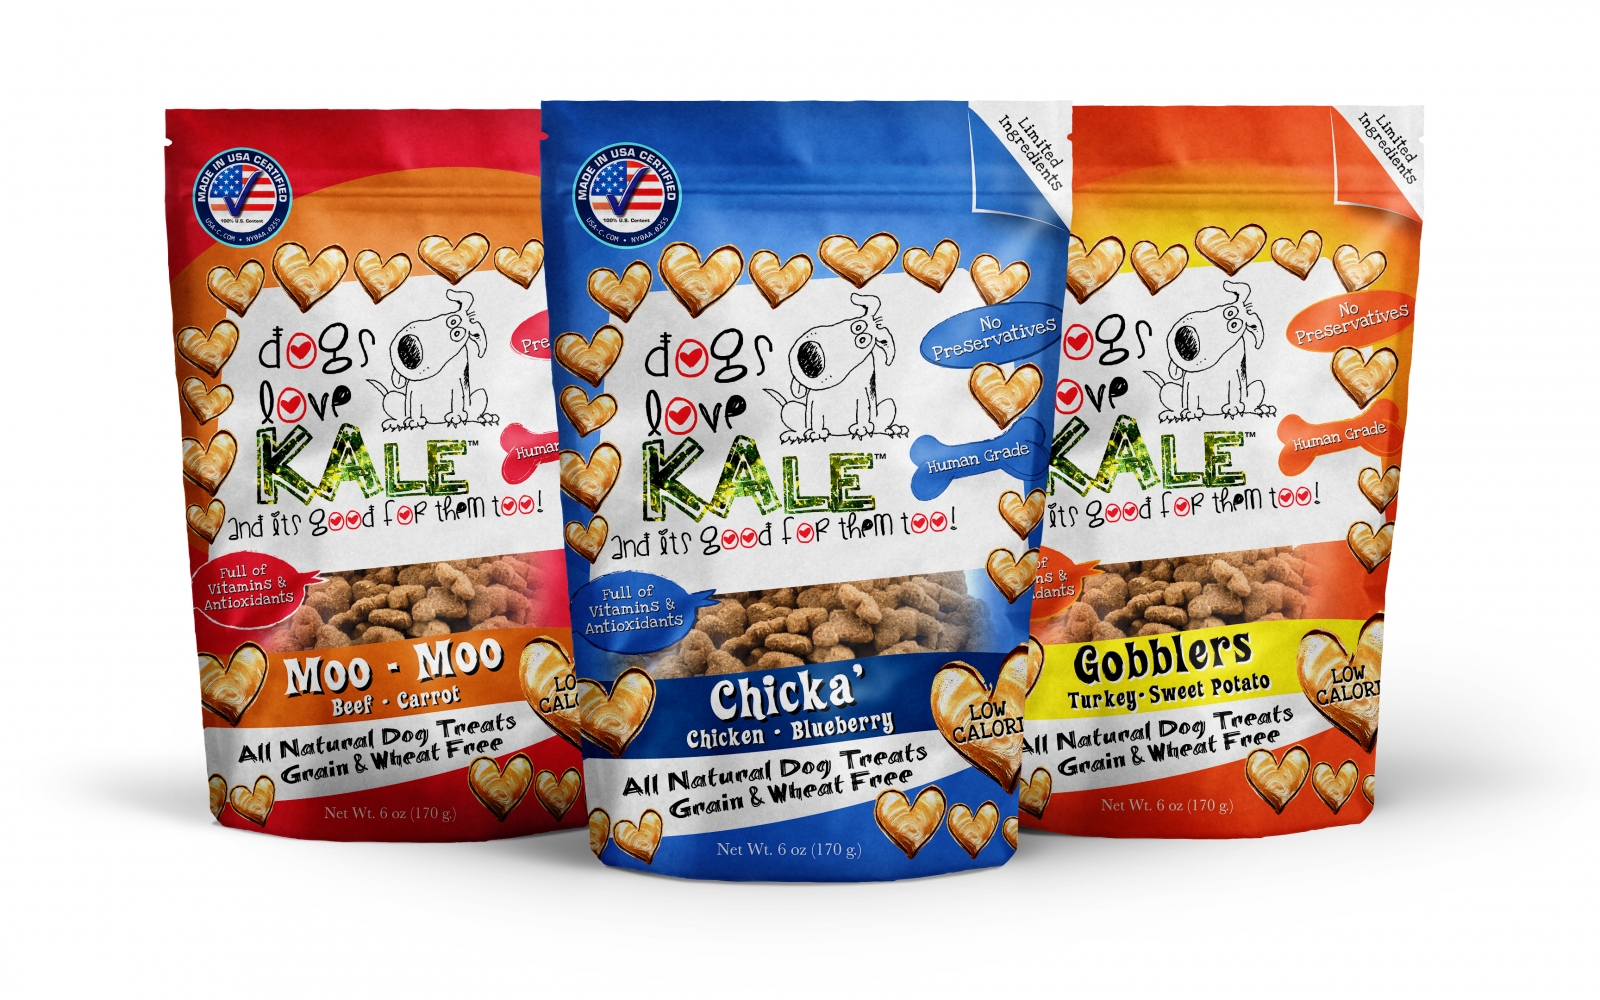 Dogs Love Kale Wheat and Grain Free Treats